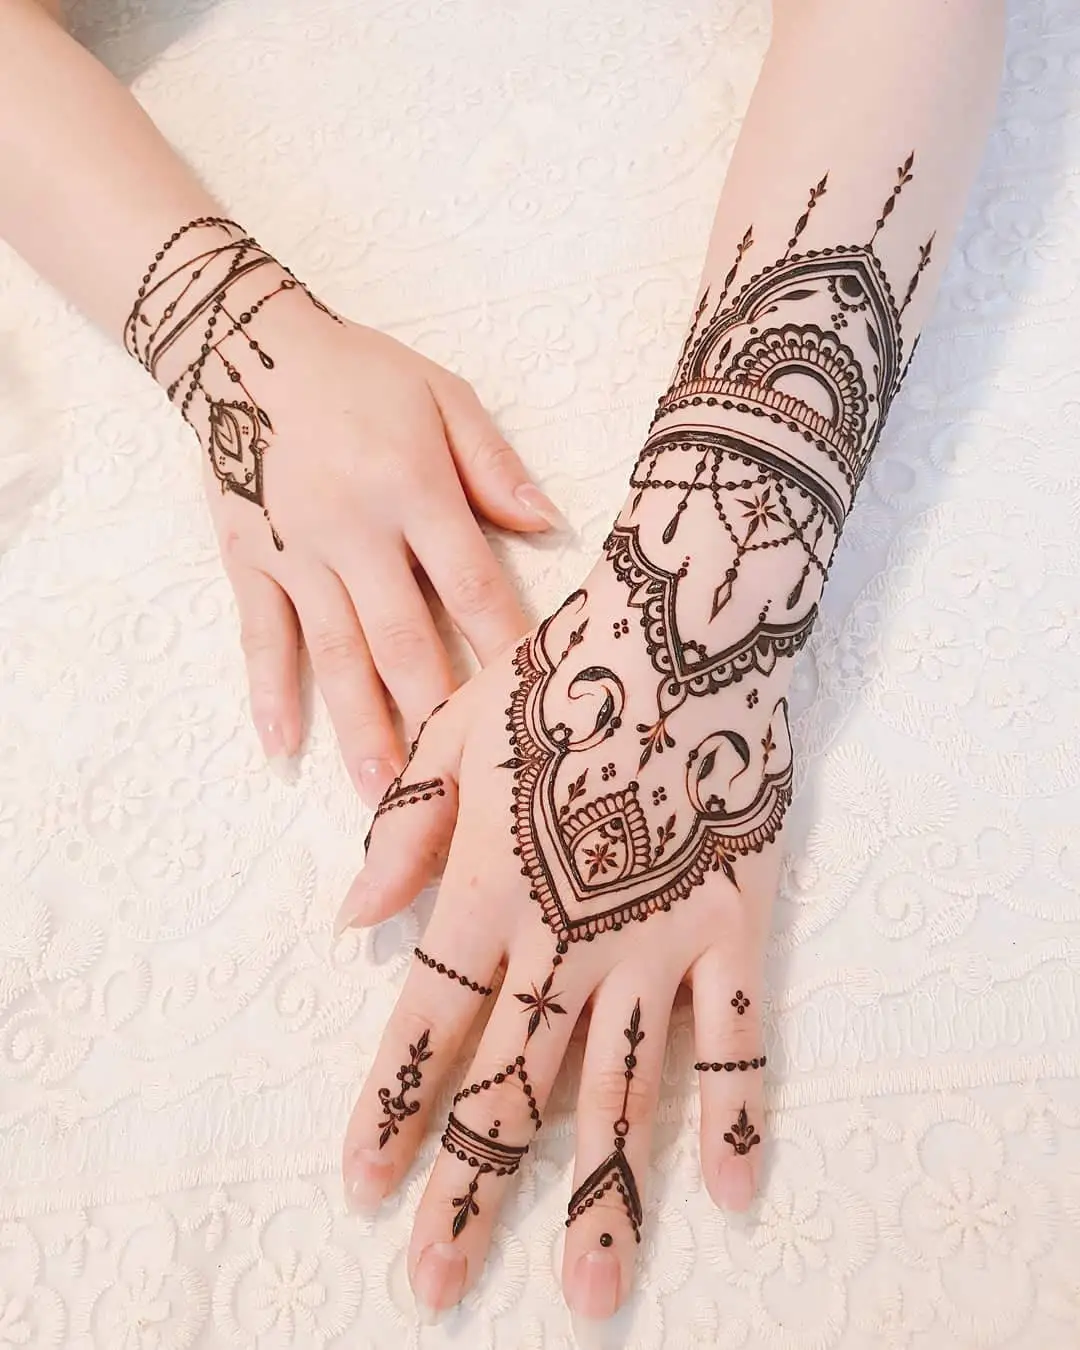 Wholesale 12 Sheet Henna Tattoo Stencils Hand Temporary Tattoo Stickers  Indian Arabian Self Adhesive Tattoo Templates From malibabacom